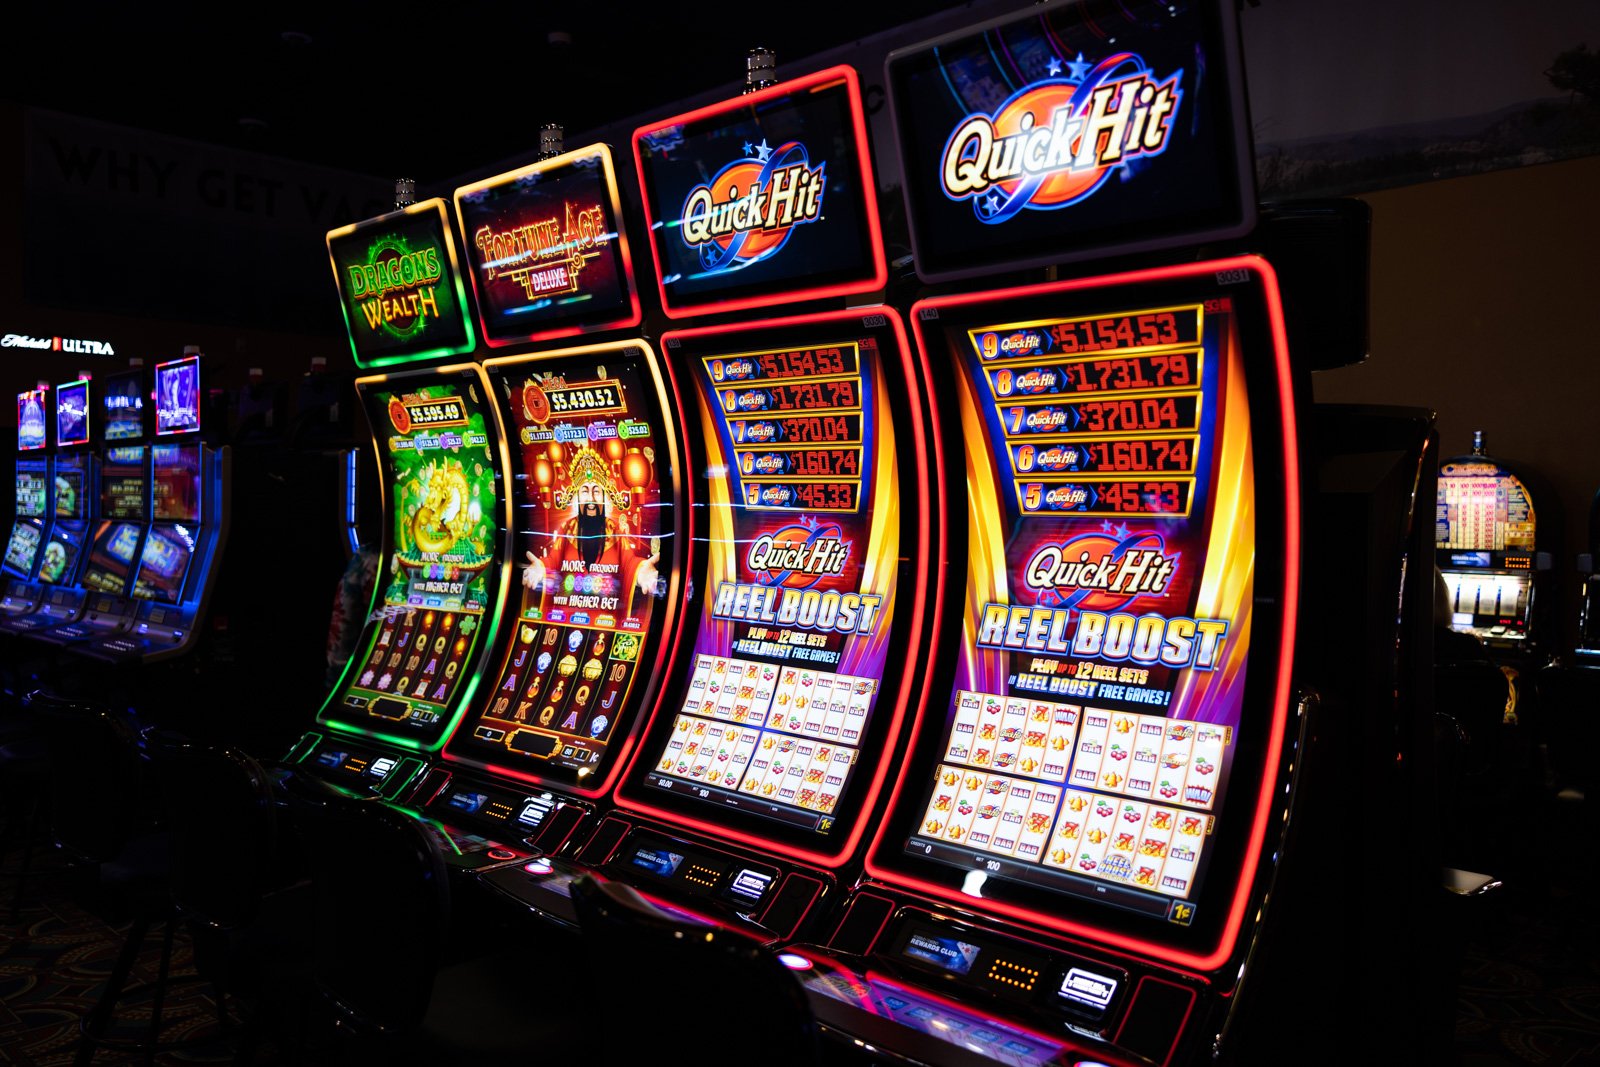 rosebud-casino-gaming-floor-slot-machines-near-valentine-nebraska-15.jpg